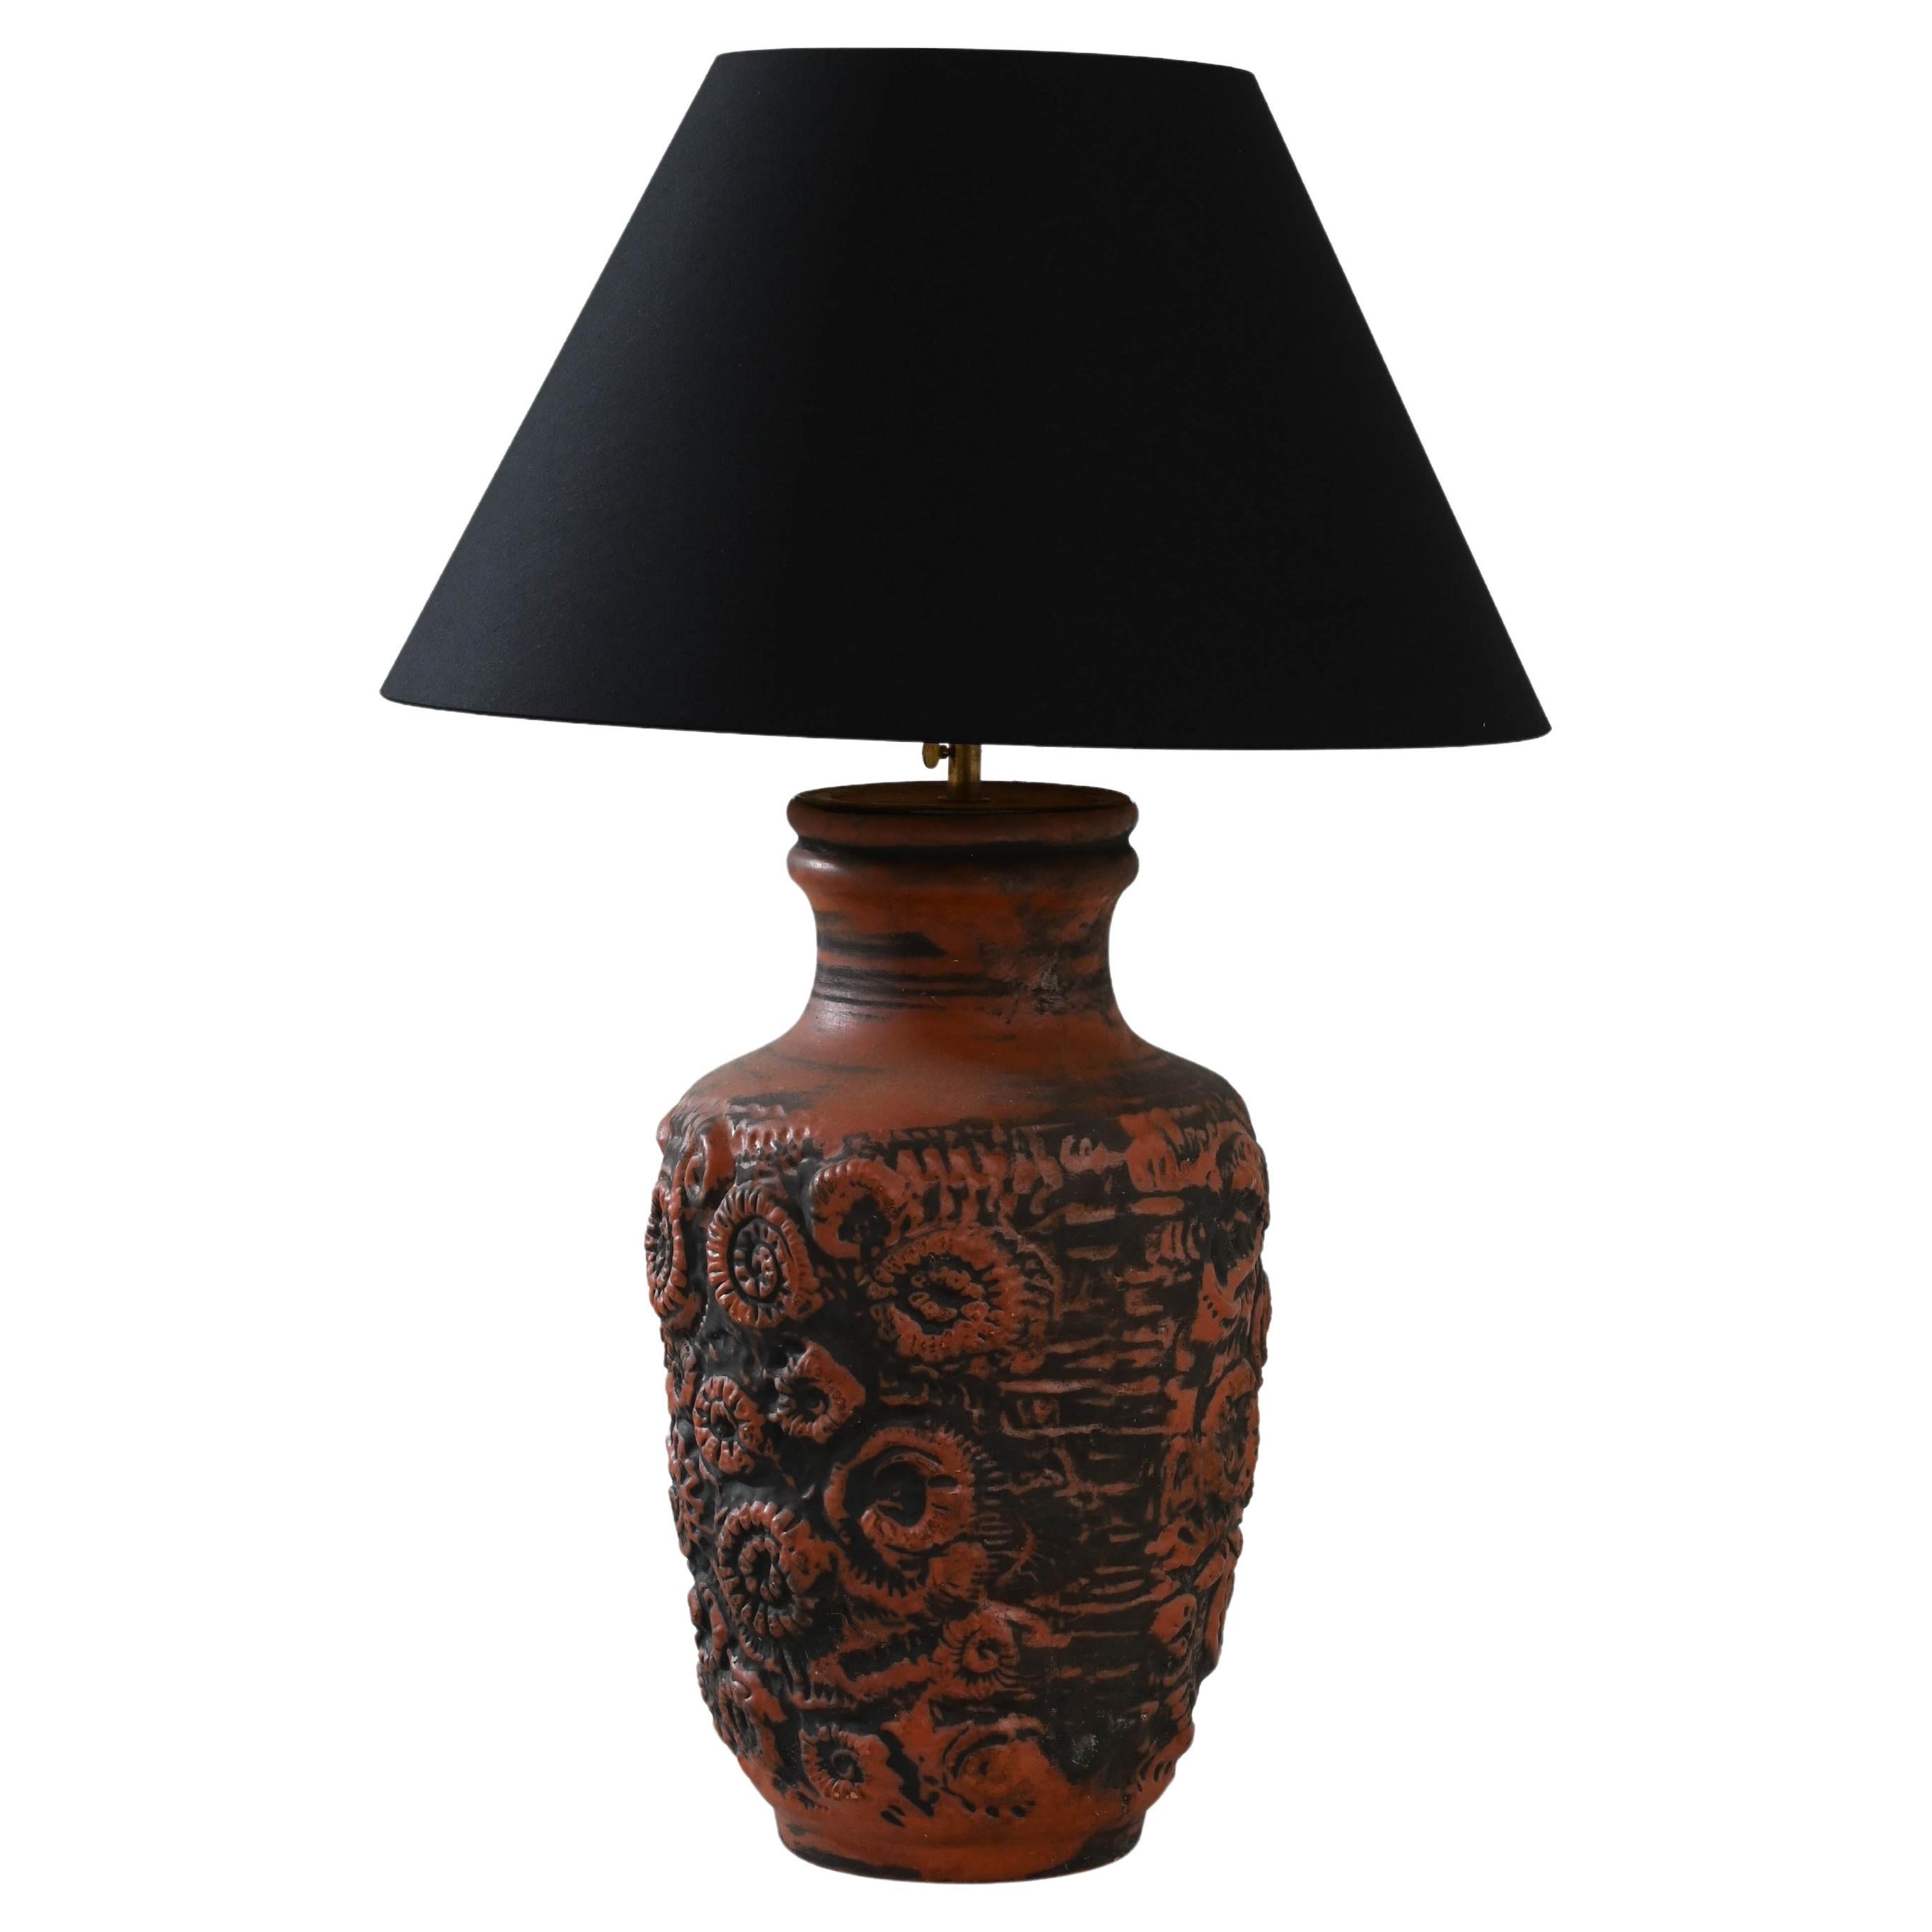 1960s German Ceramic Table Lamp For Sale